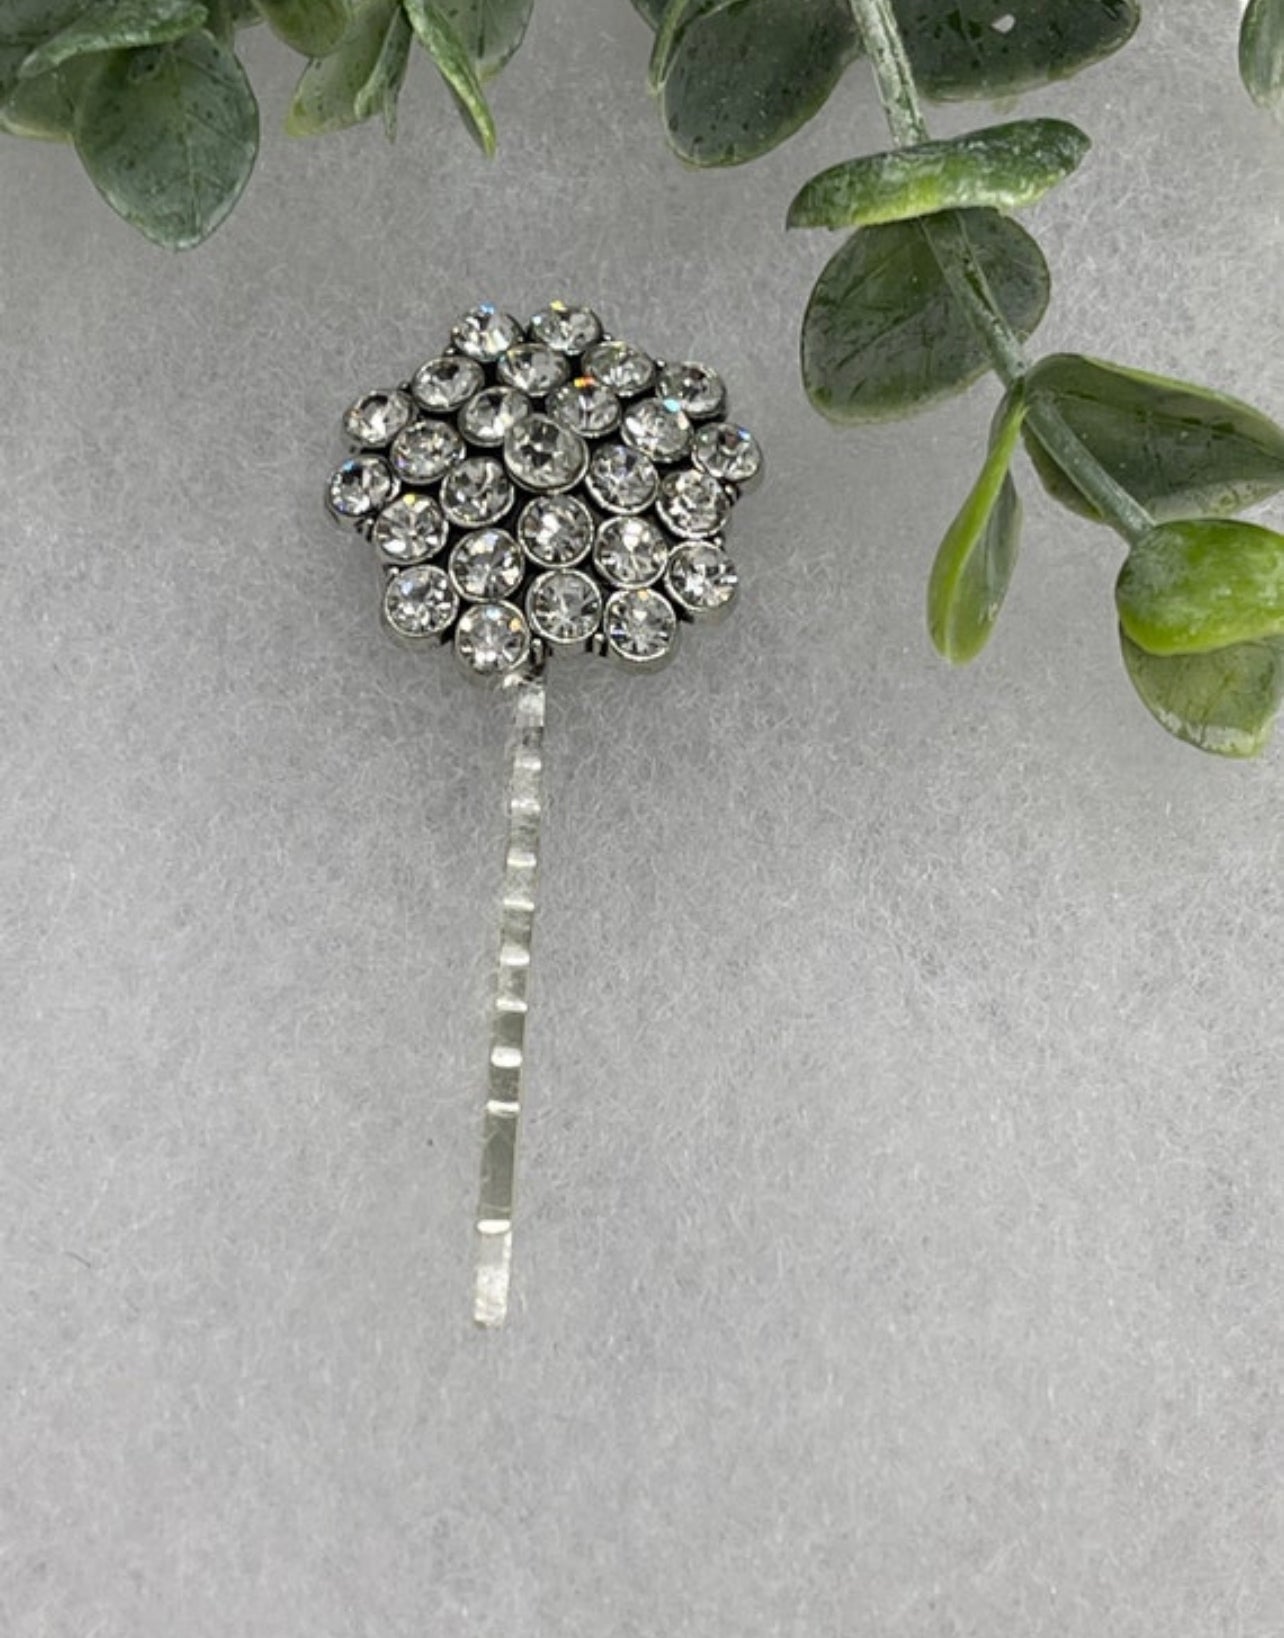 Crystal Rhinestone vintage Style 2.5” Long hair accessory Bobby pin bridal wedding formal princess hair accessory accessories handmade by hairdazzzel